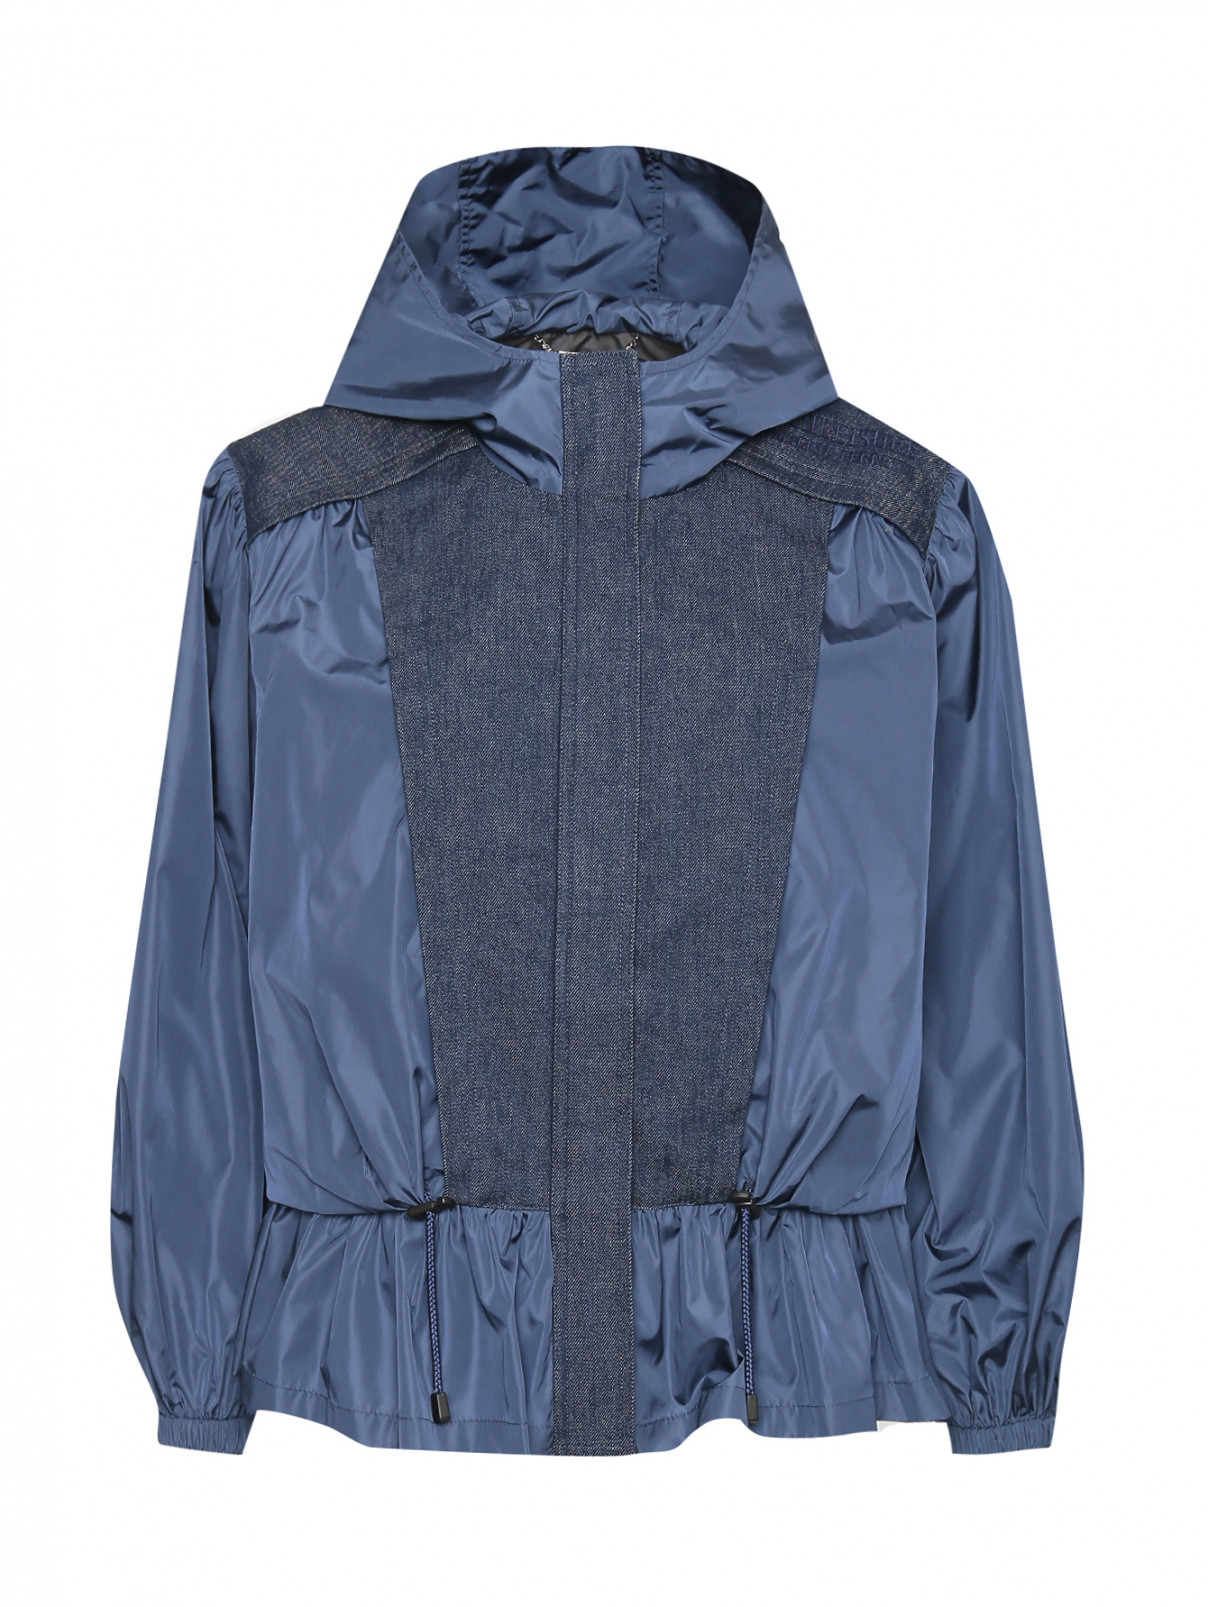 Комбинированная куртка с капюшоном Alberta Ferretti  –  Общий вид  – Цвет:  Синий